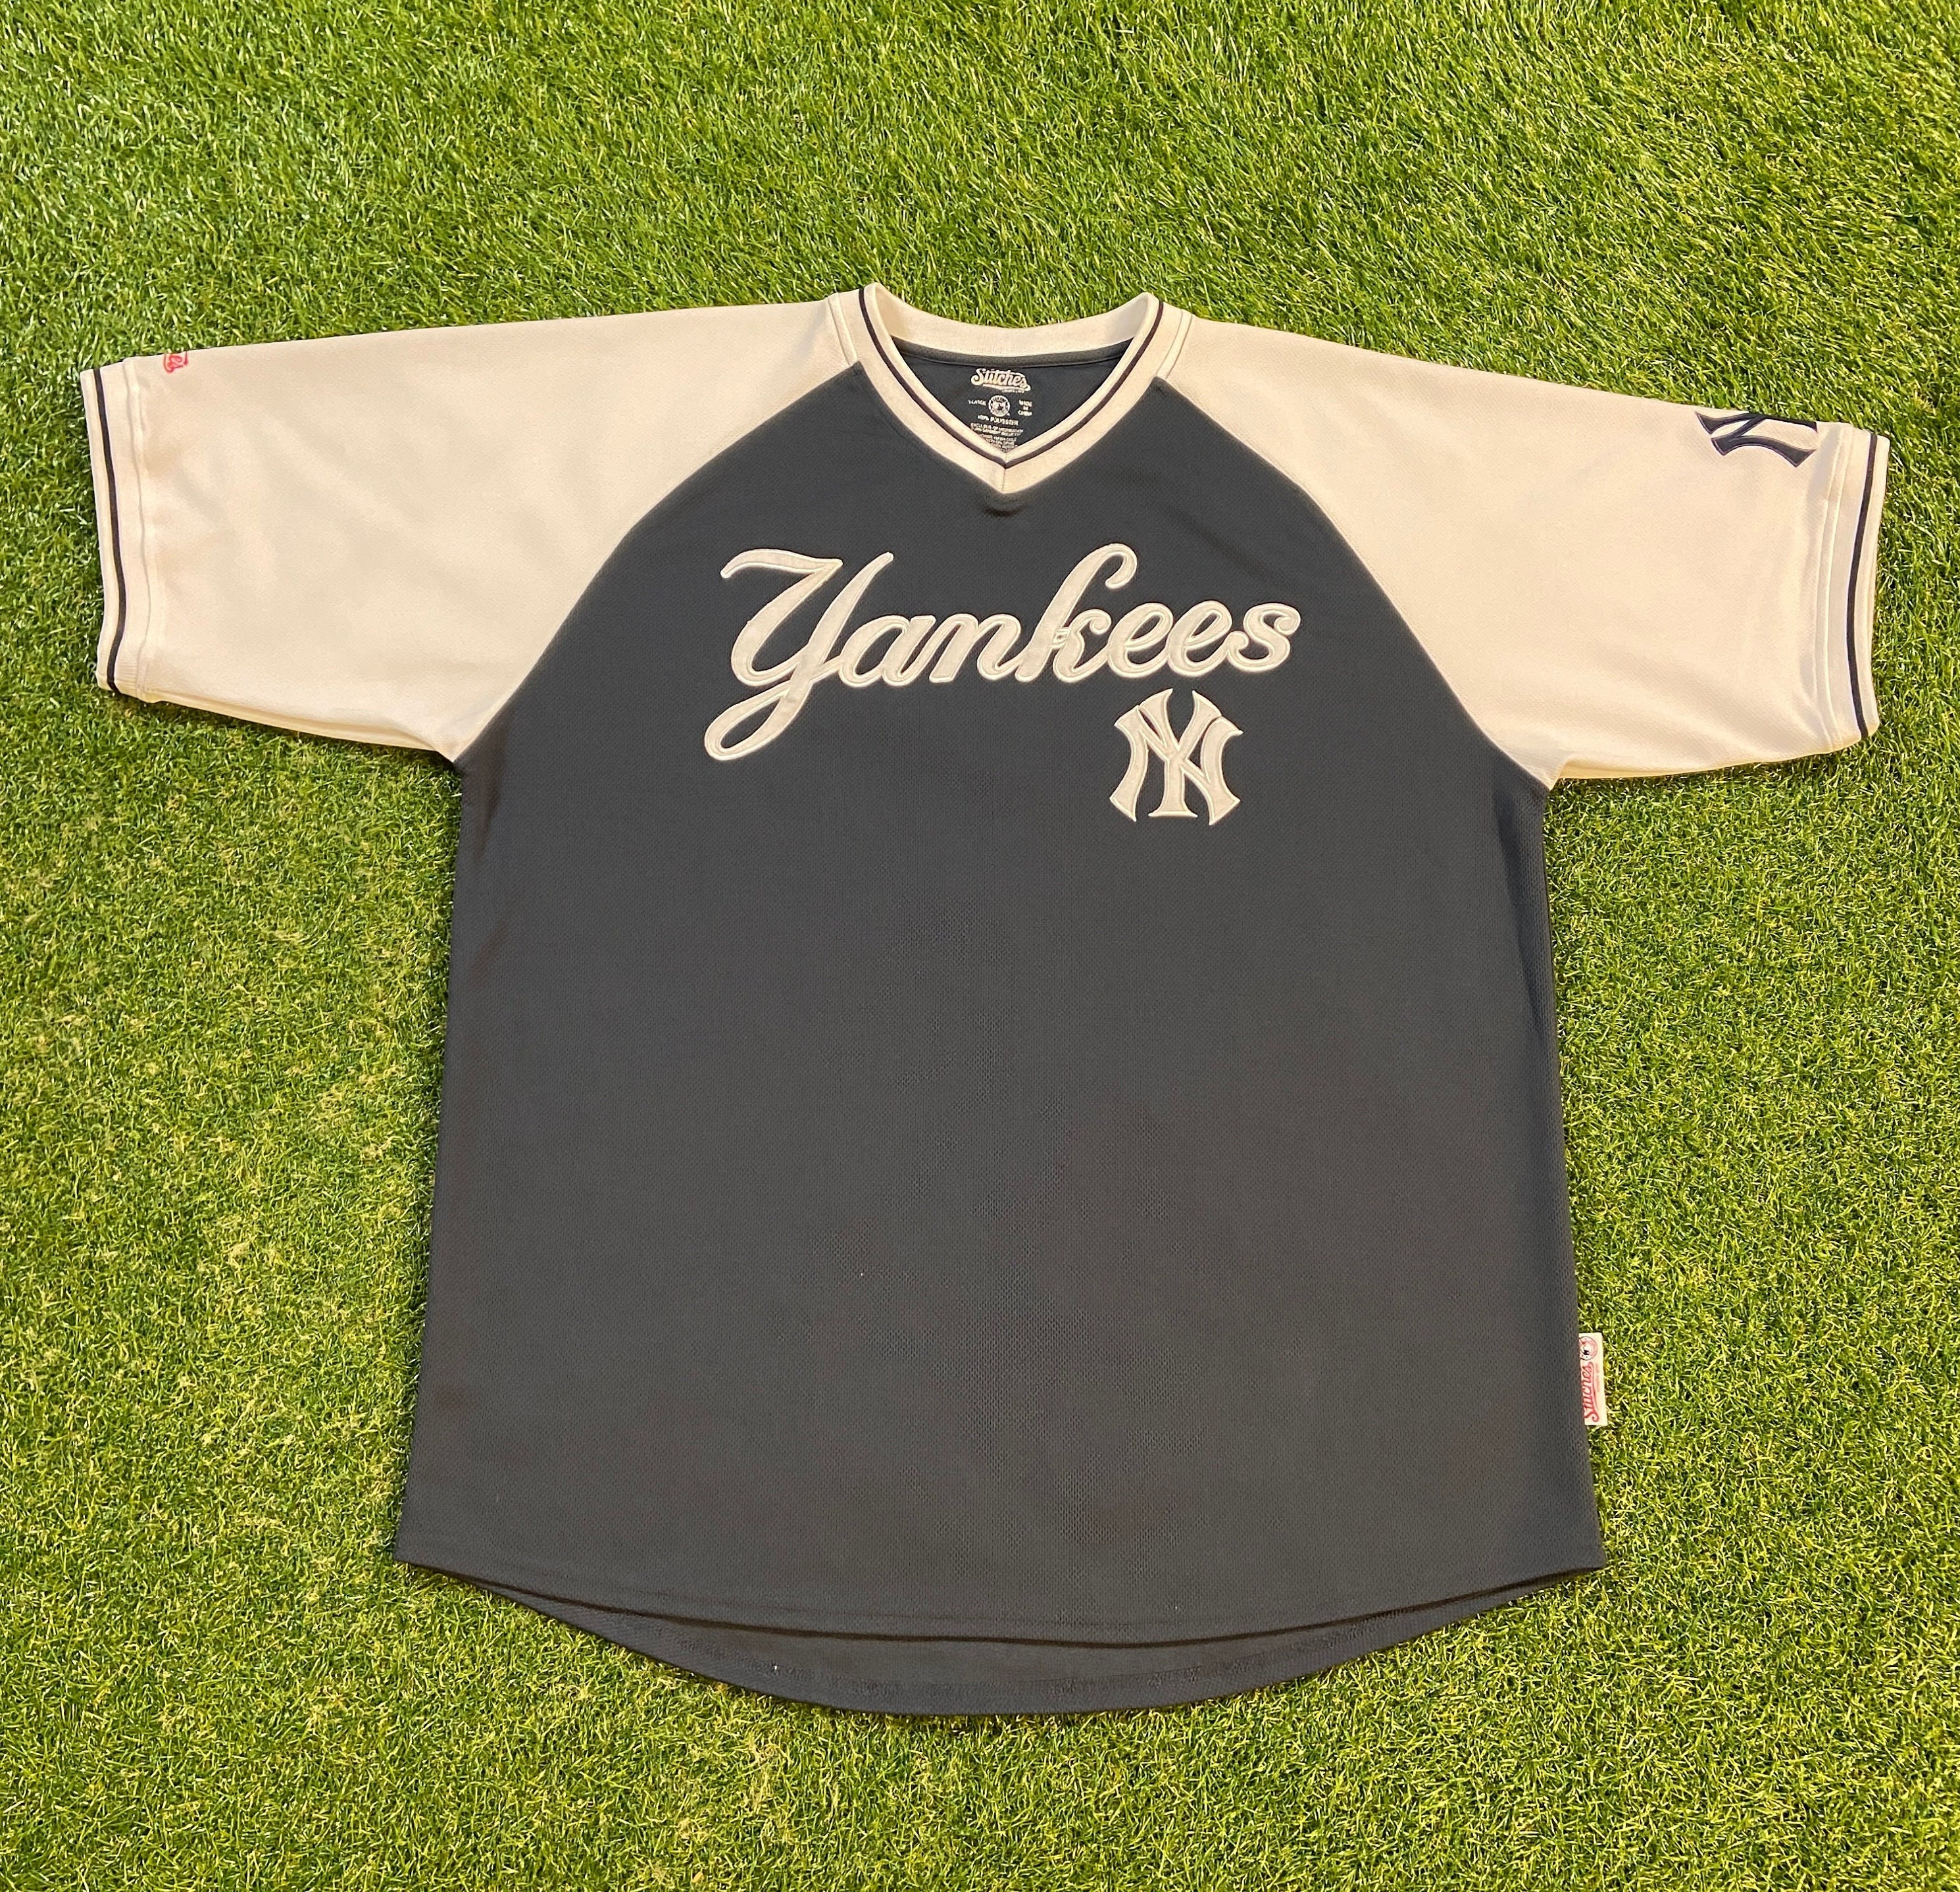 New York NY Yankees Stitches Athletic Gear Baseball Shirt Jersey XL